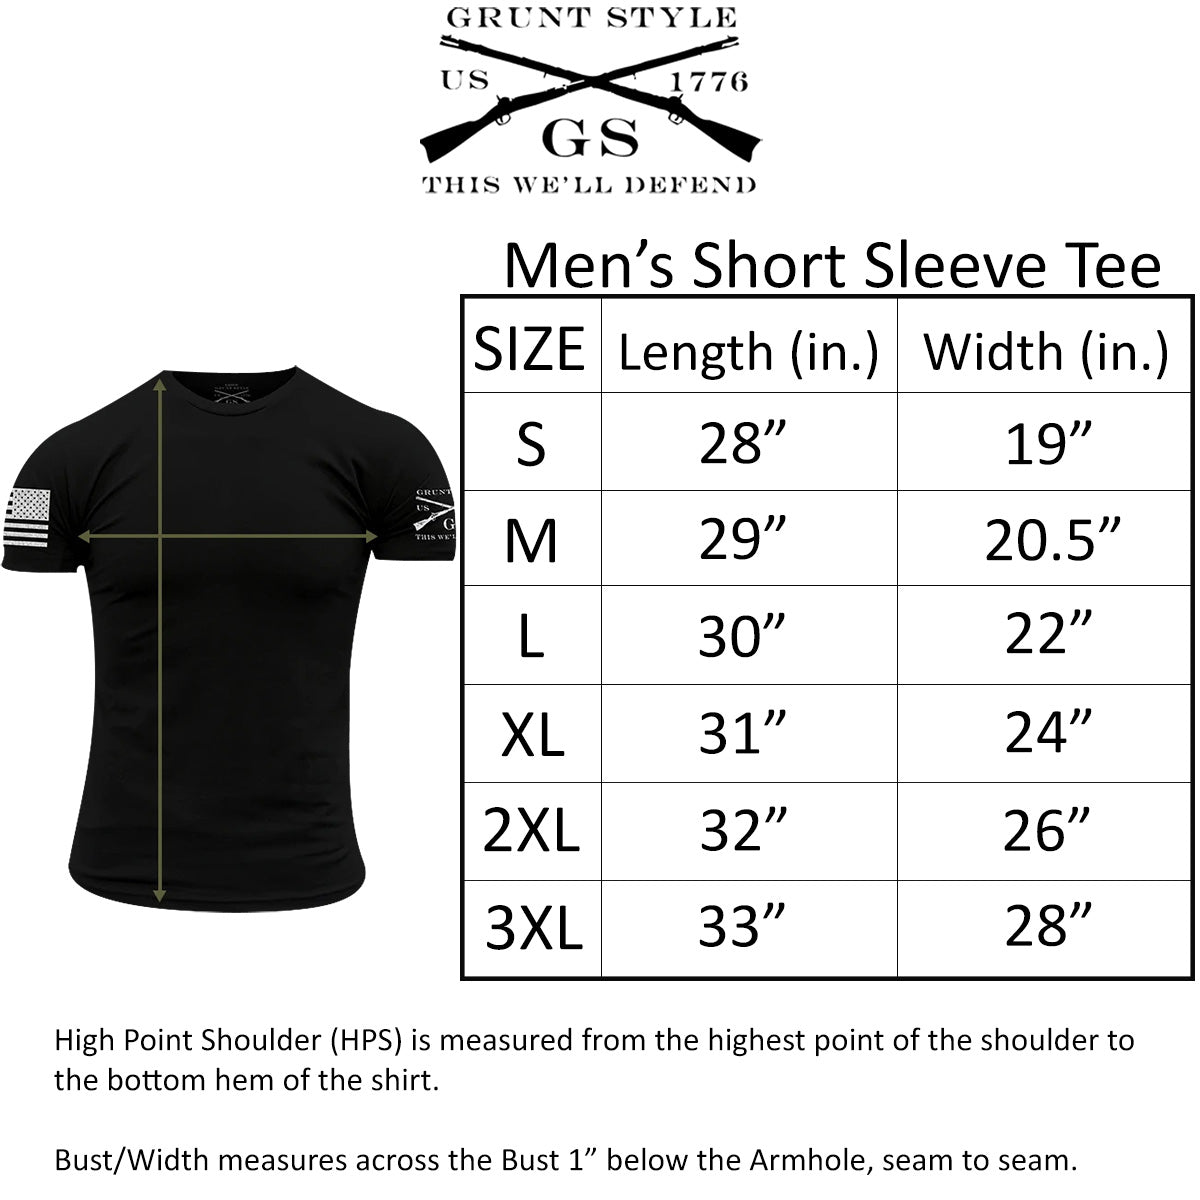 Grunt Style USMC - Est. 1775 T-Shirt - Black Grunt Style